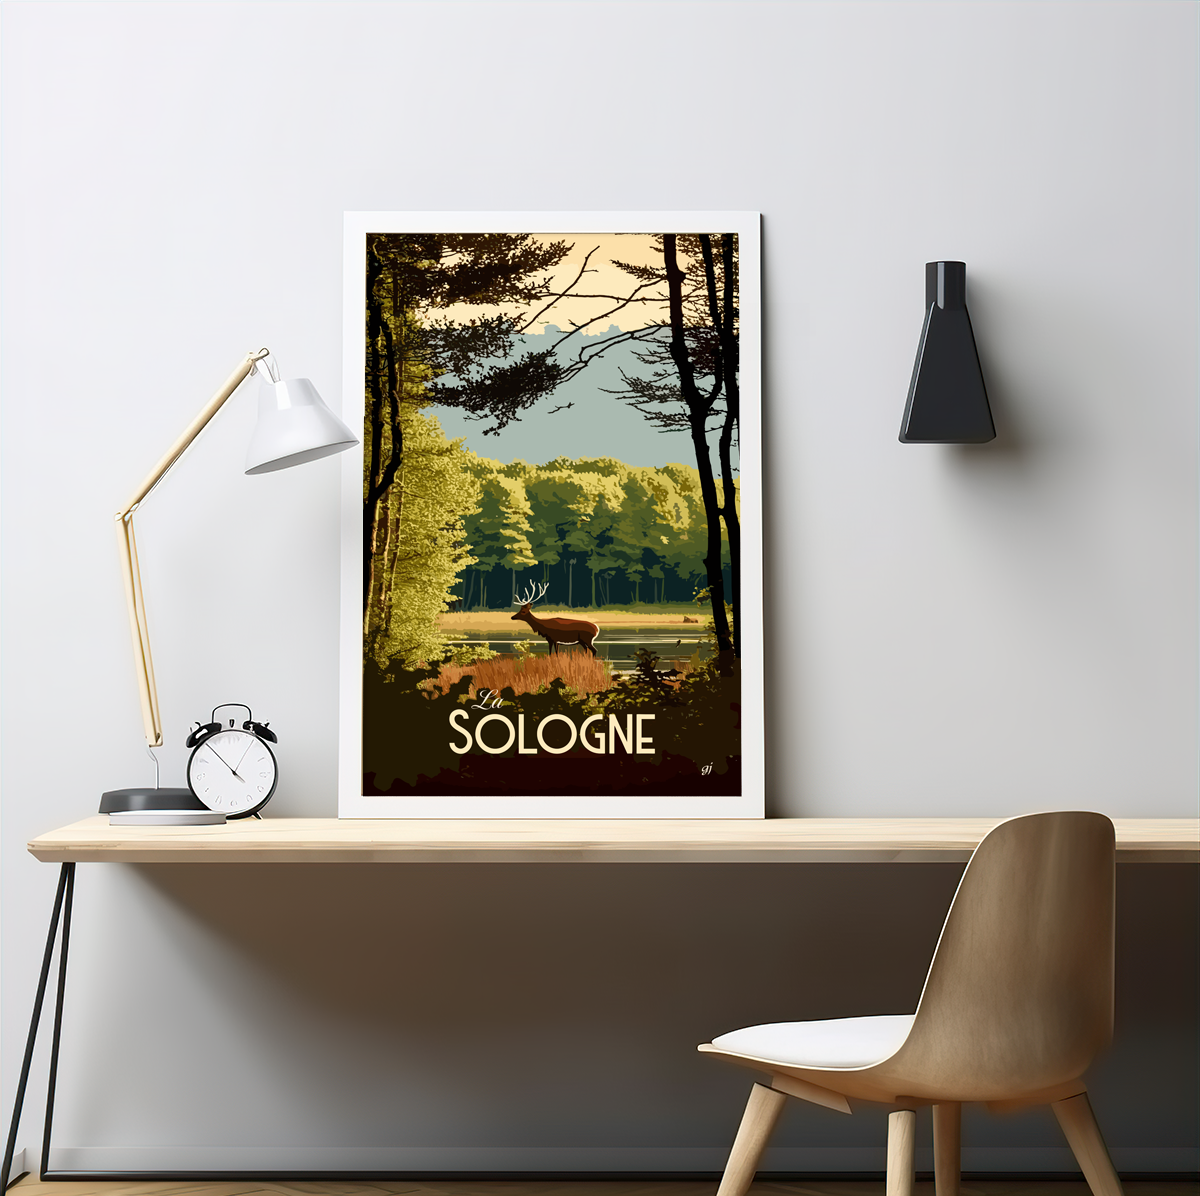 Sologne poster by bon voyage design